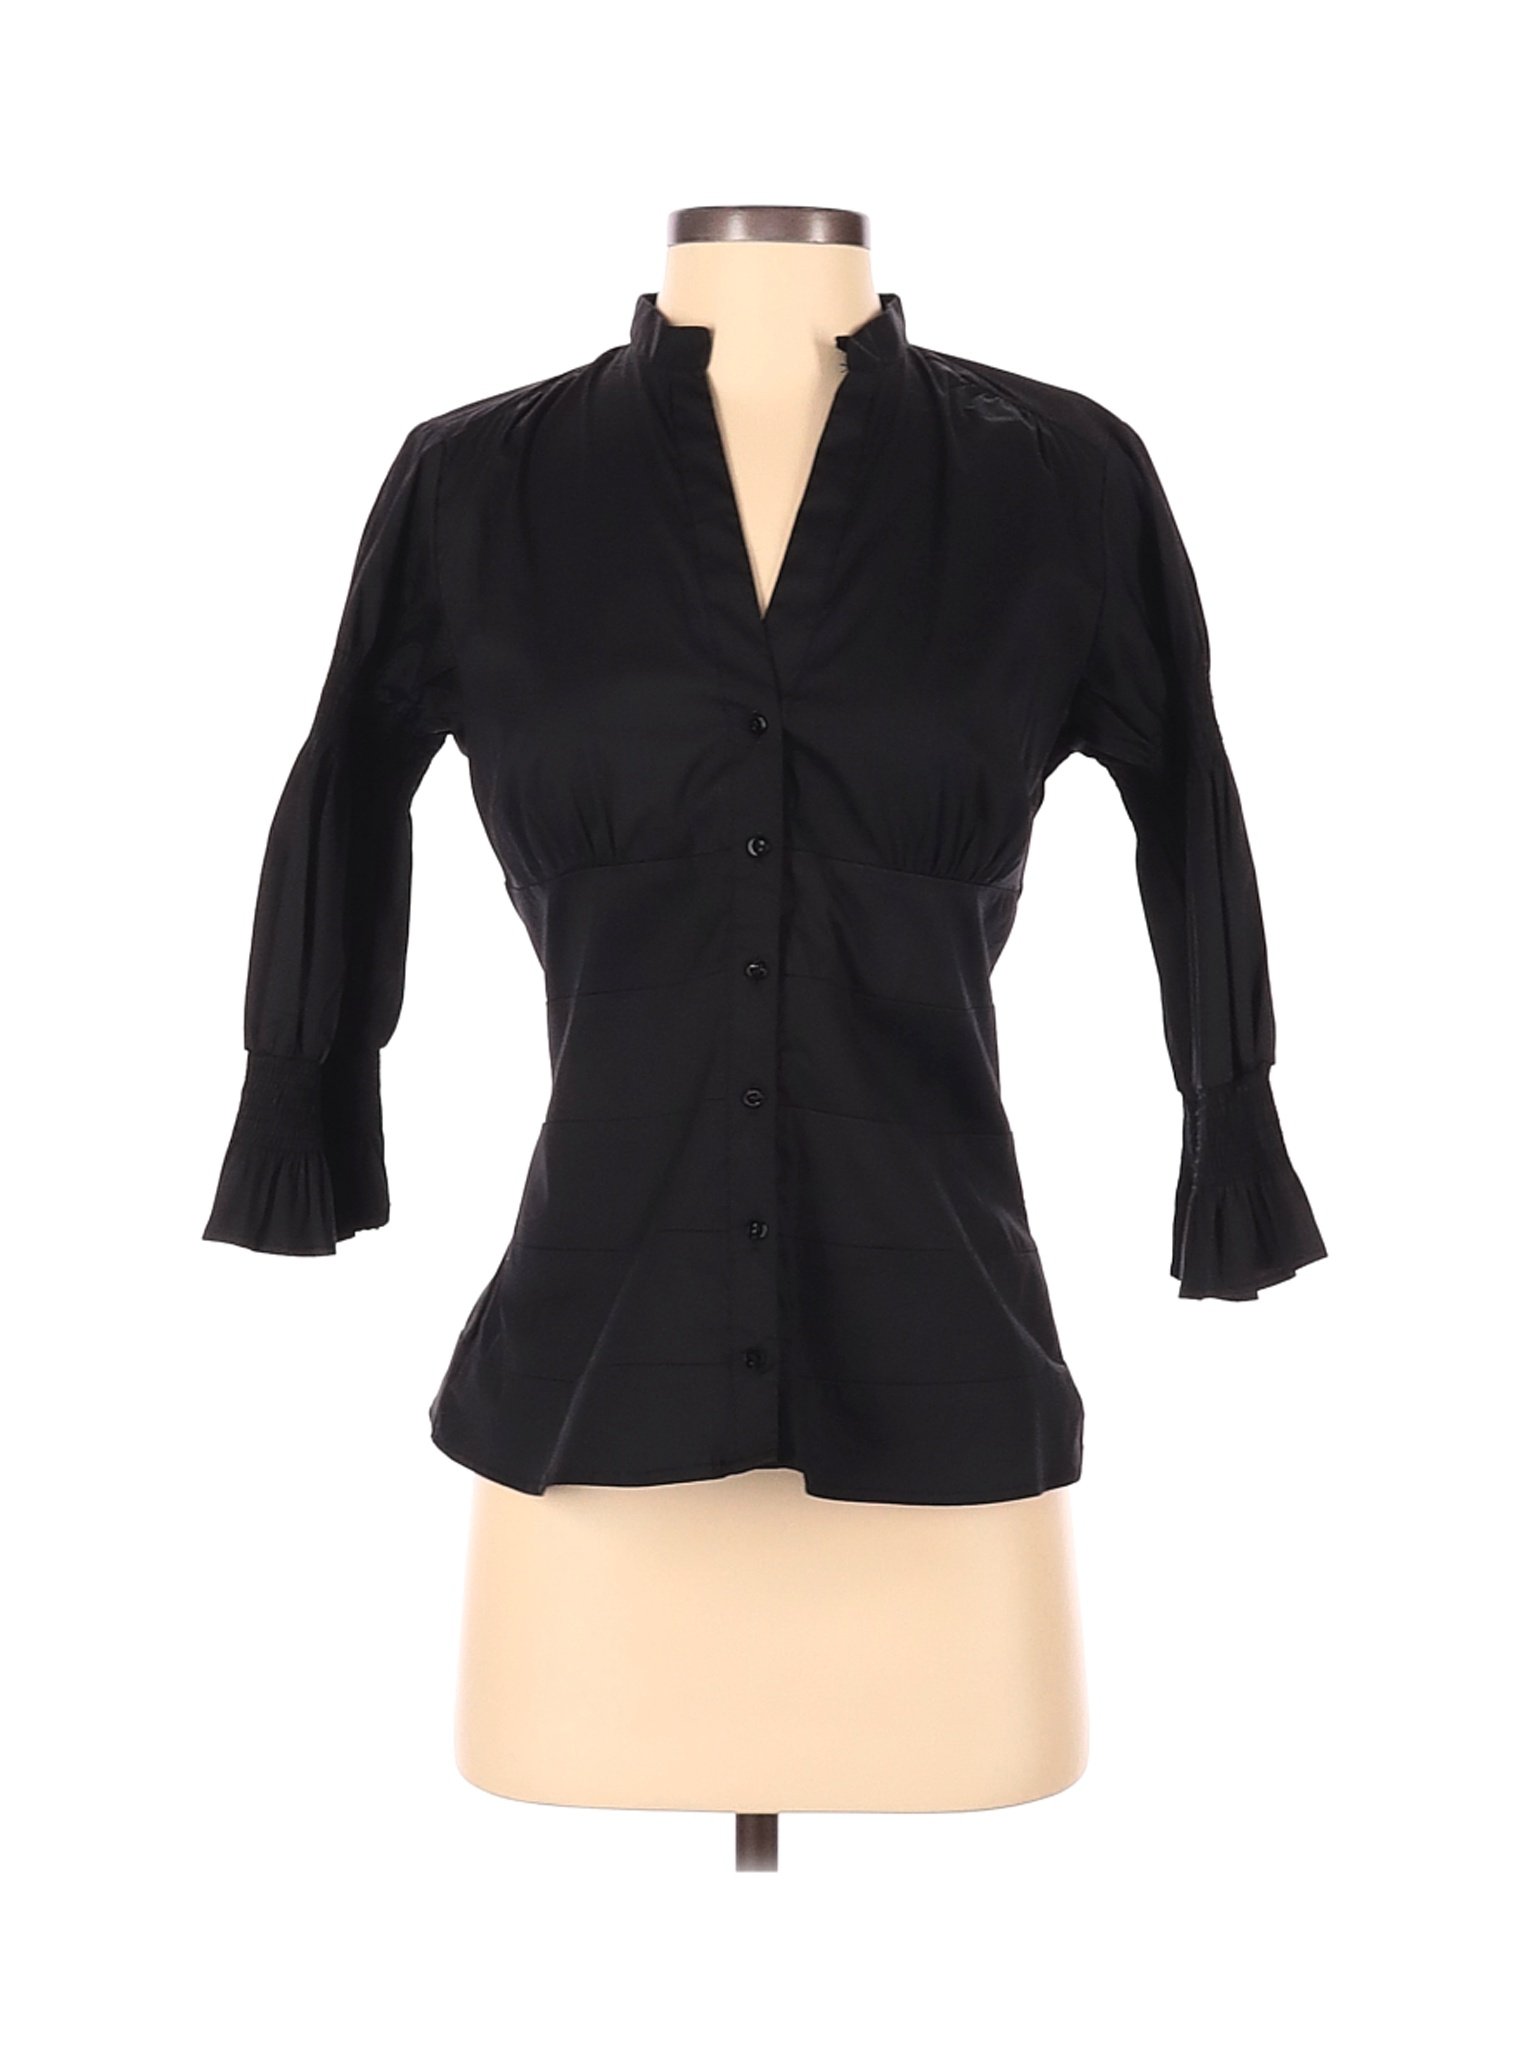 Zara Women Black Long Sleeve Button-Down Shirt S | eBay